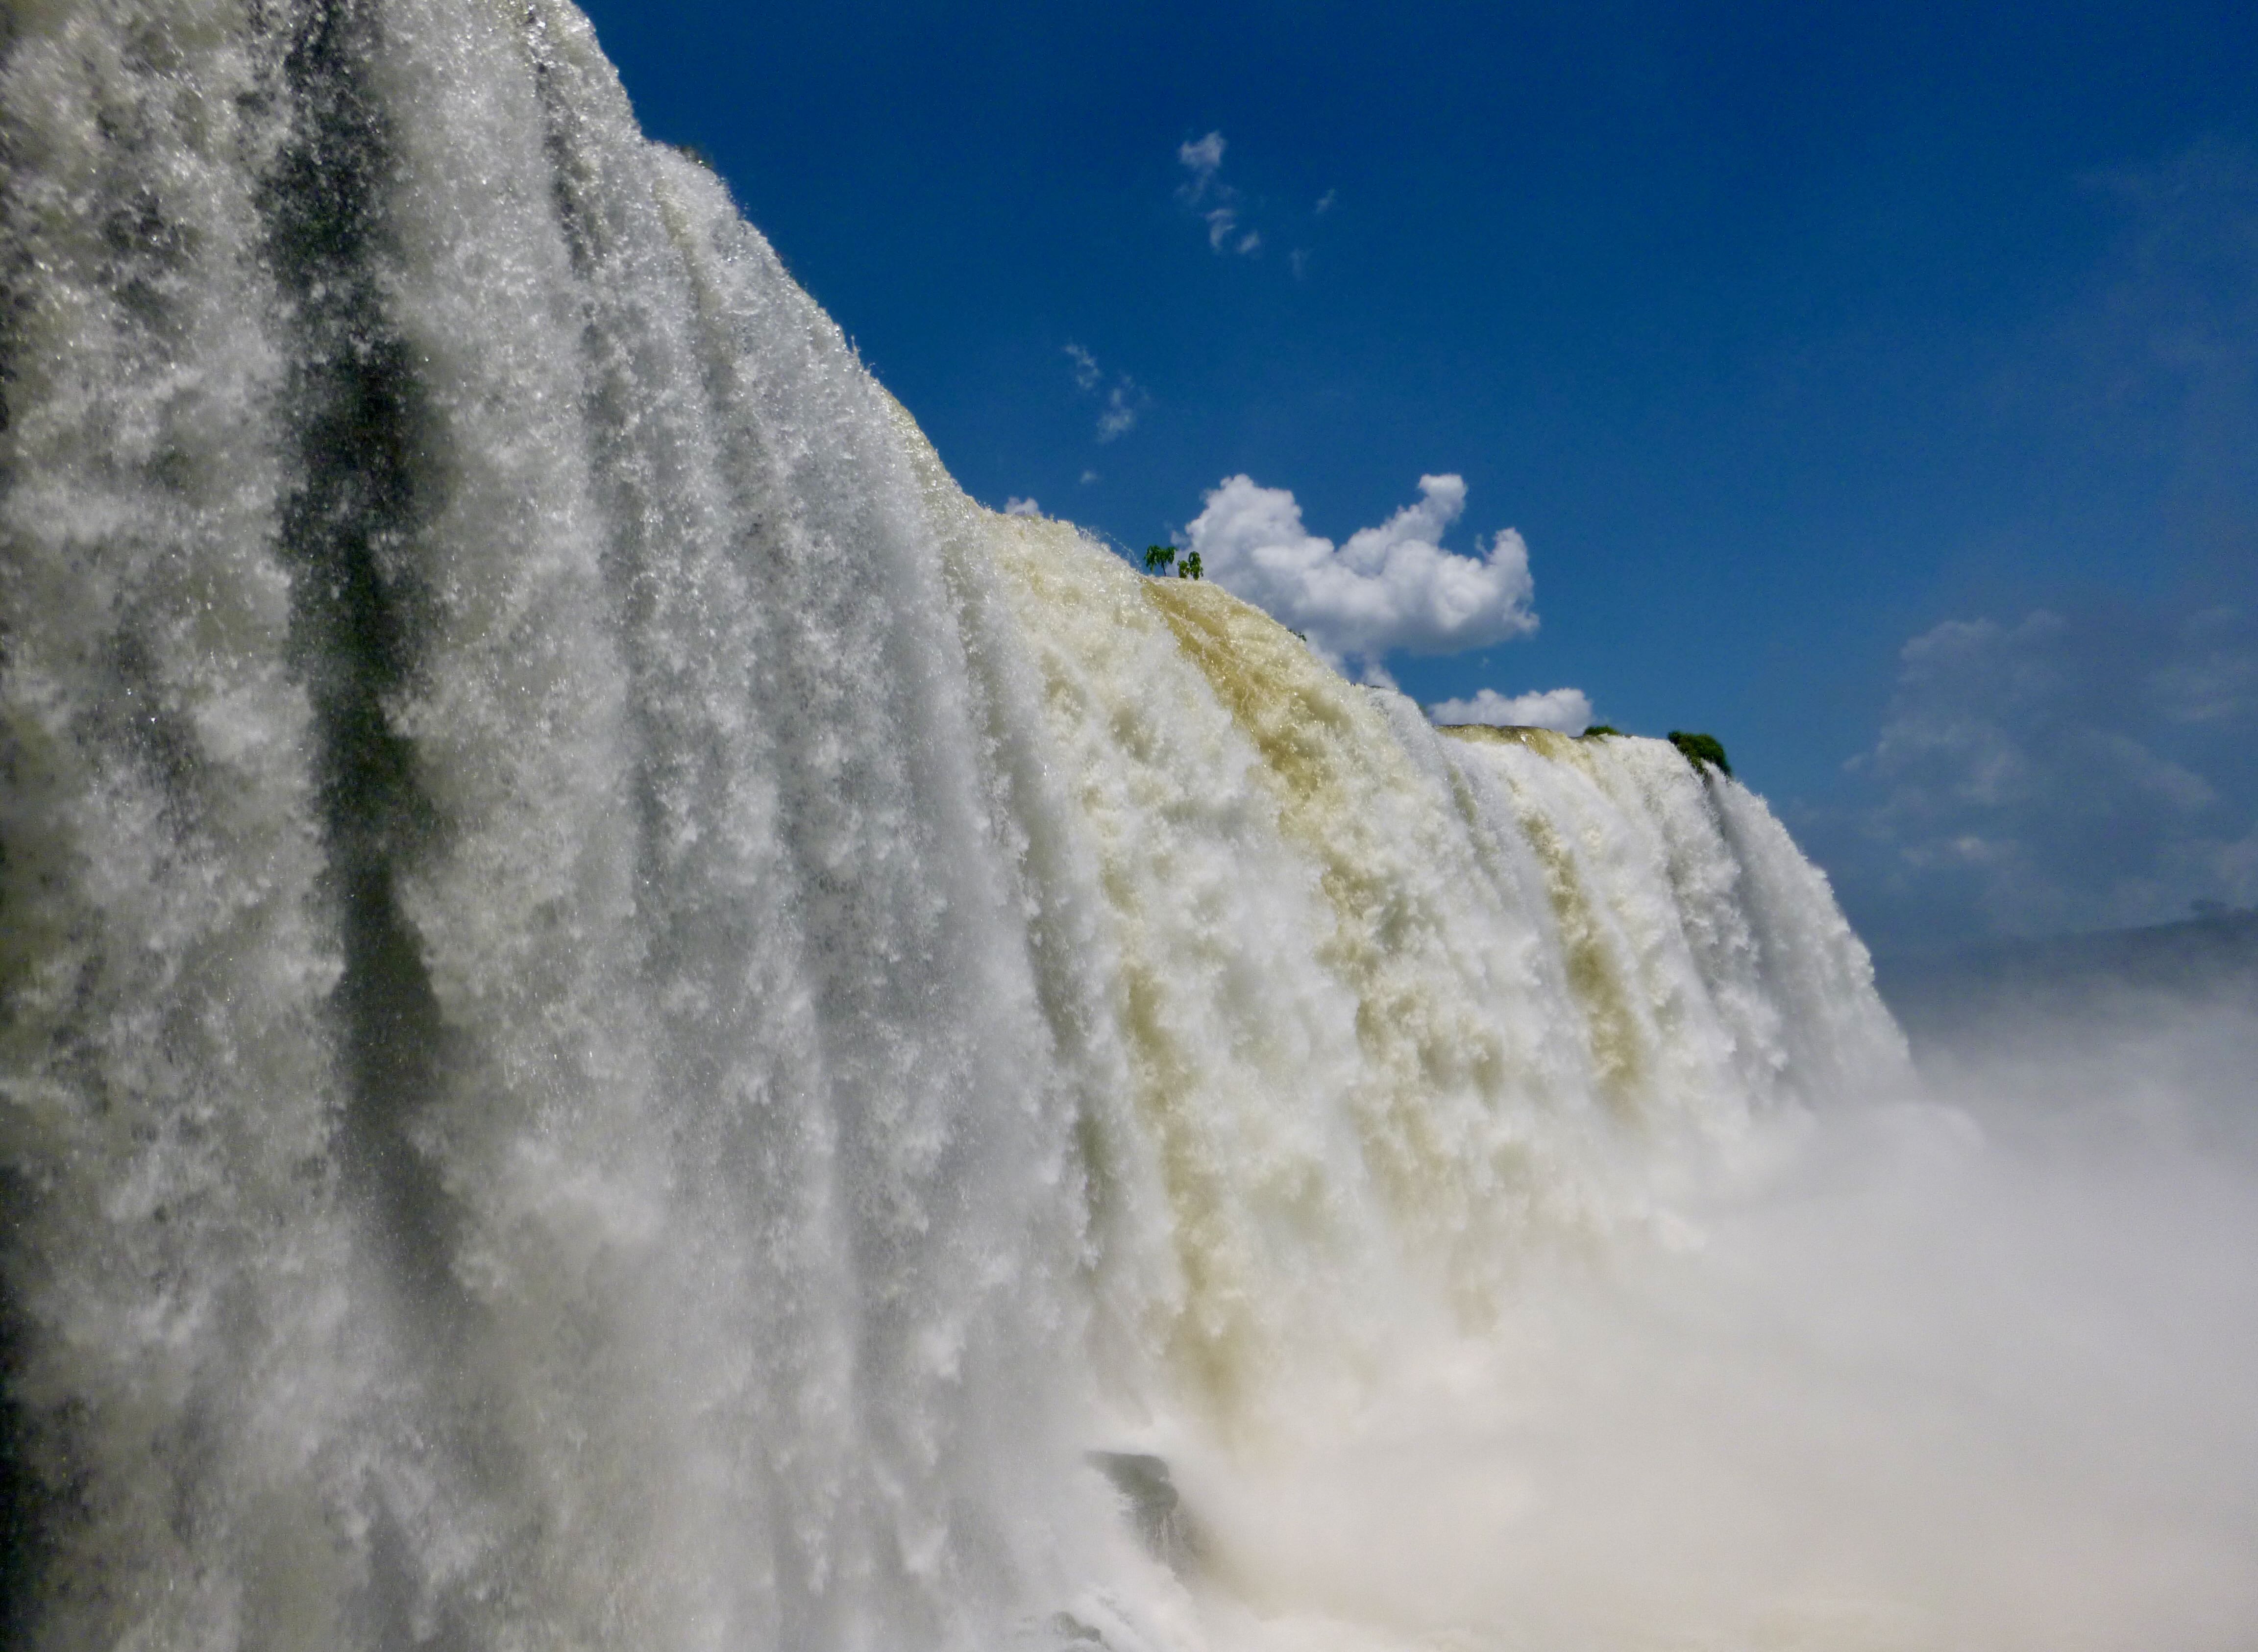 Iguaçu Falls Brazil Visit